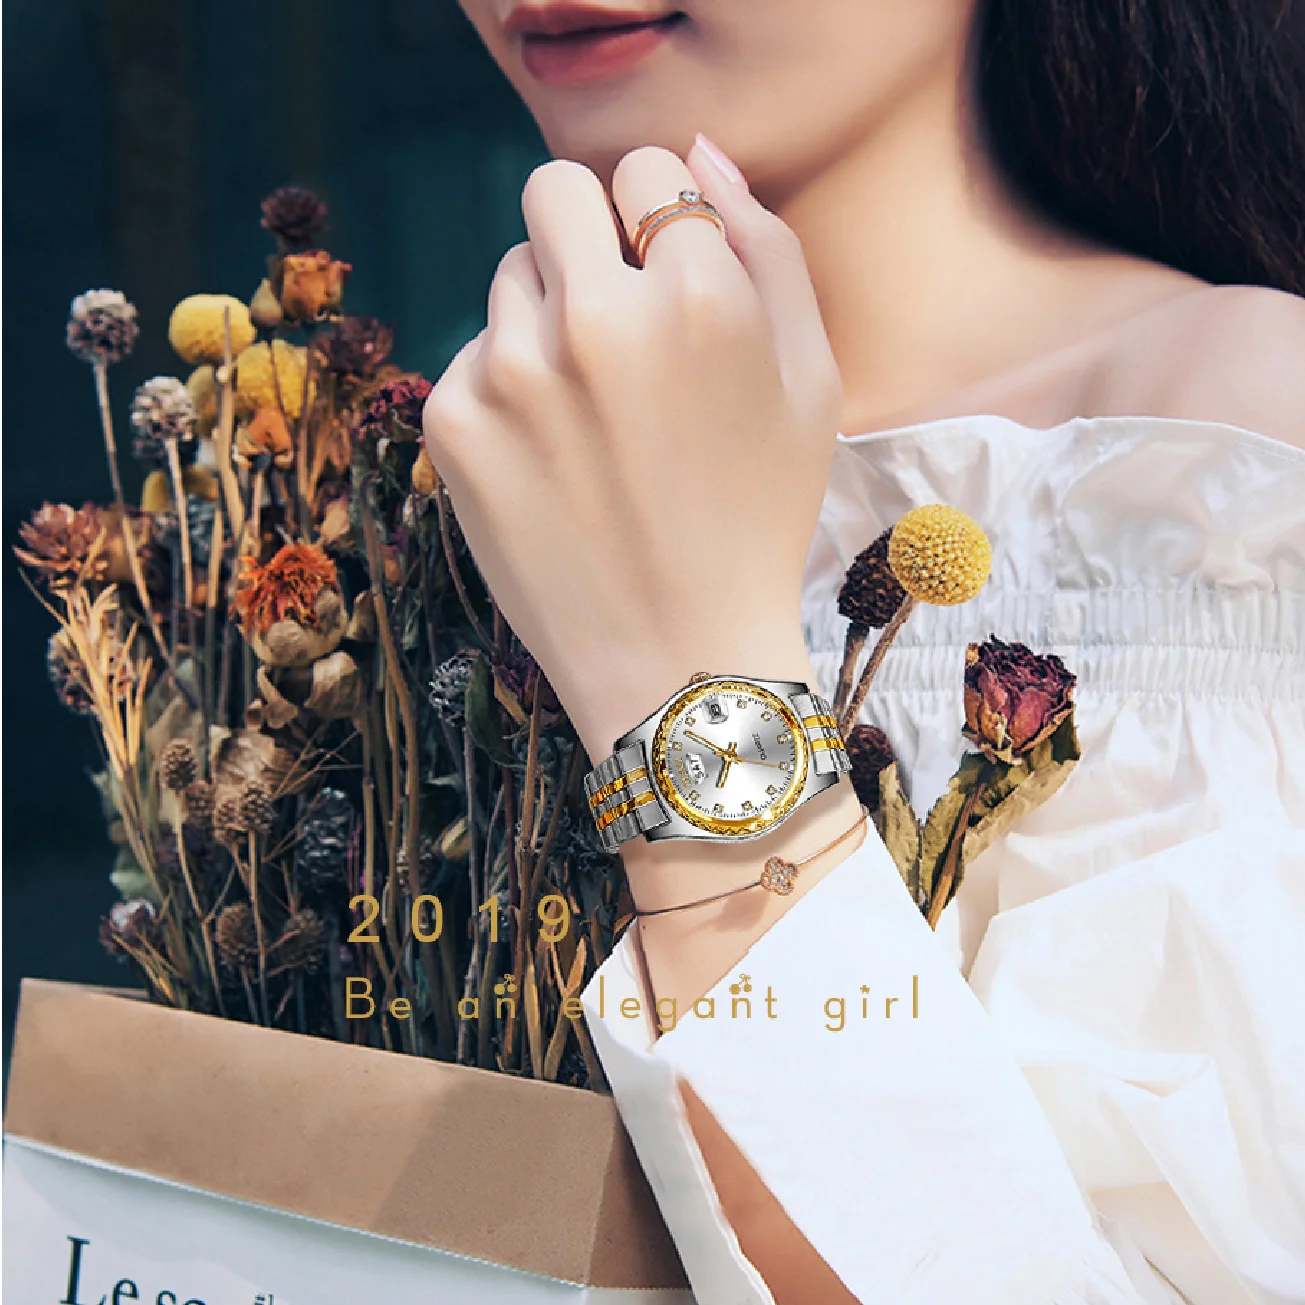 2022 CHENXI New Gold Watches Women Dress Watch Fashion Ladies Rhinestone Quartz Watches Female WristWatch Clock Relogio Feminin enlarge